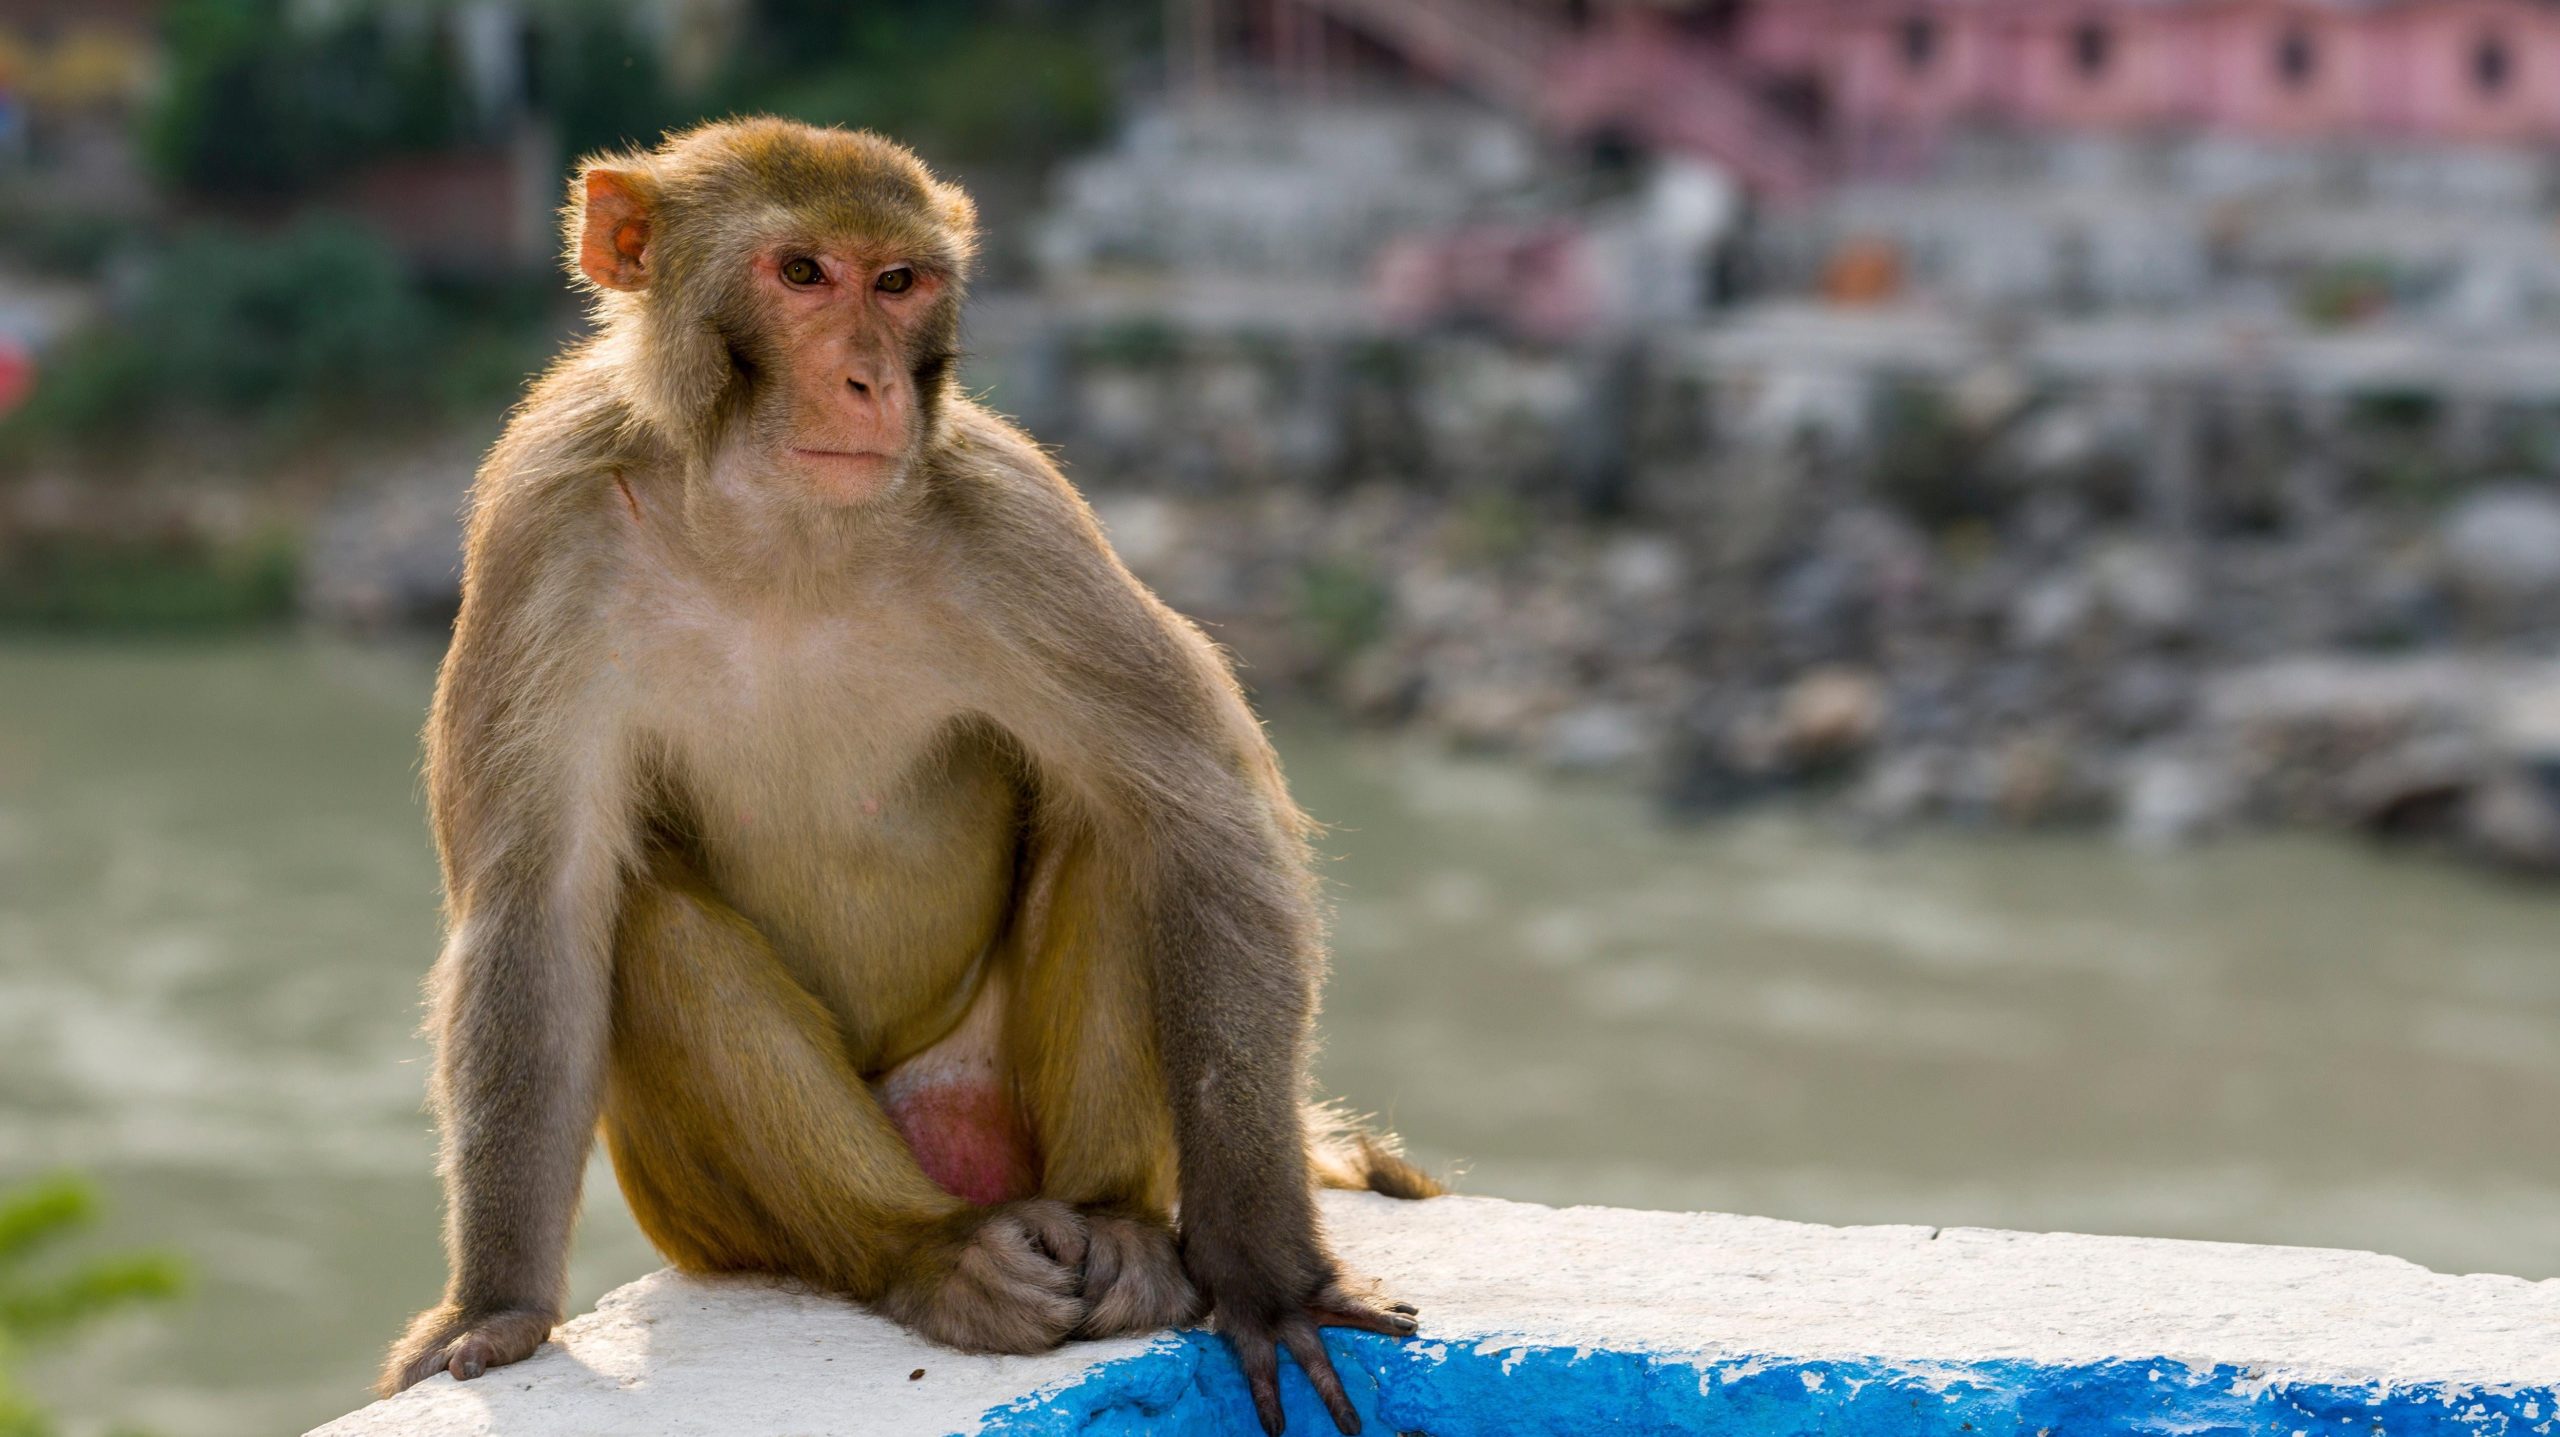  A rhesus monkey (Macaca mulatta). (Photo: Frank Bienewald/LightRocket, Getty Images)